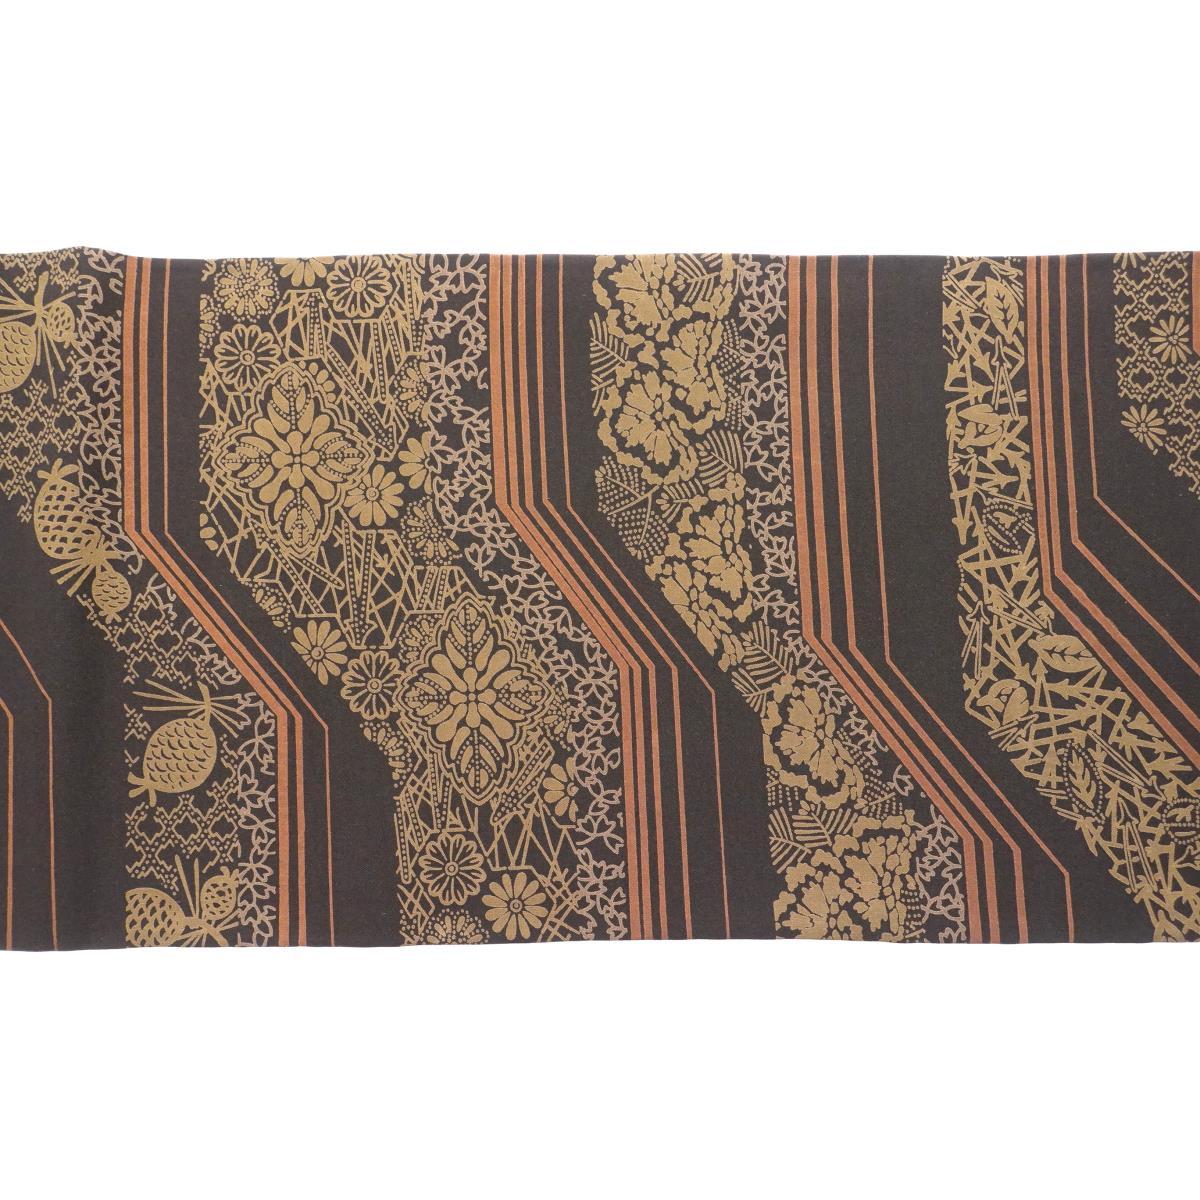 [Unused items] Fukuro obi dyed pongee Zento pattern